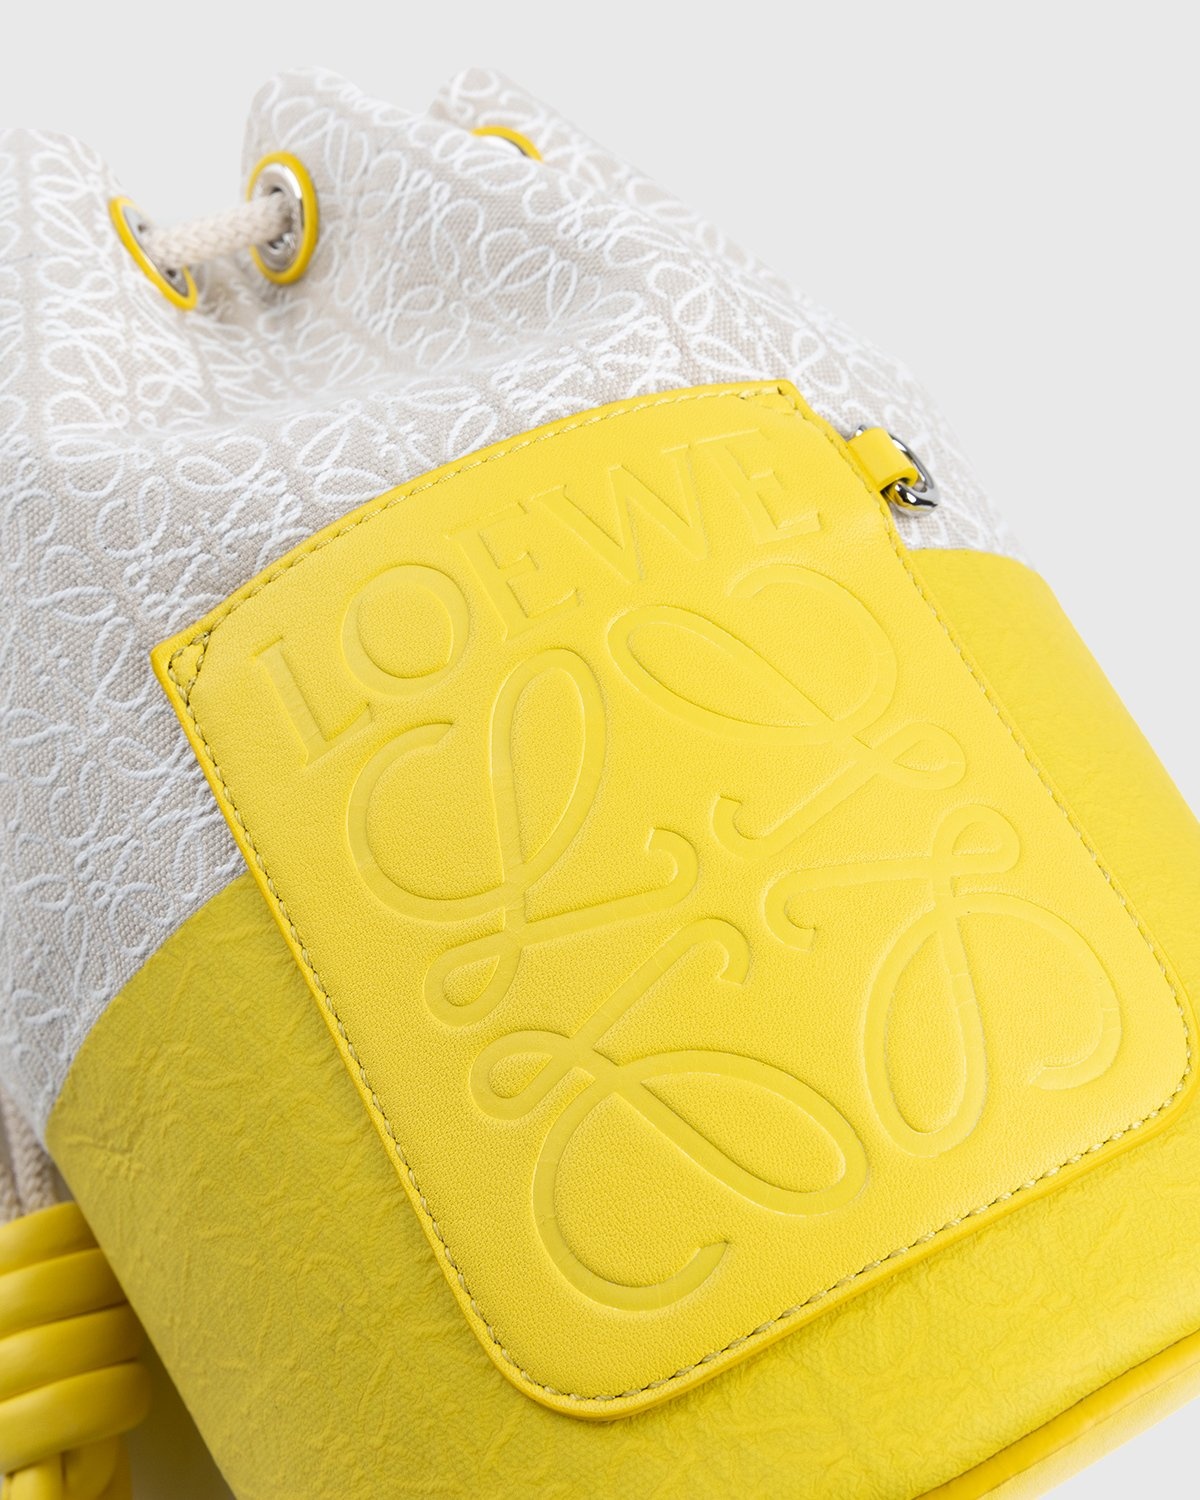 Loewe – Paula's Ibiza Small Sailor Bag Ecru/Lemon - Shoulder Bags - Yellow - Image 3